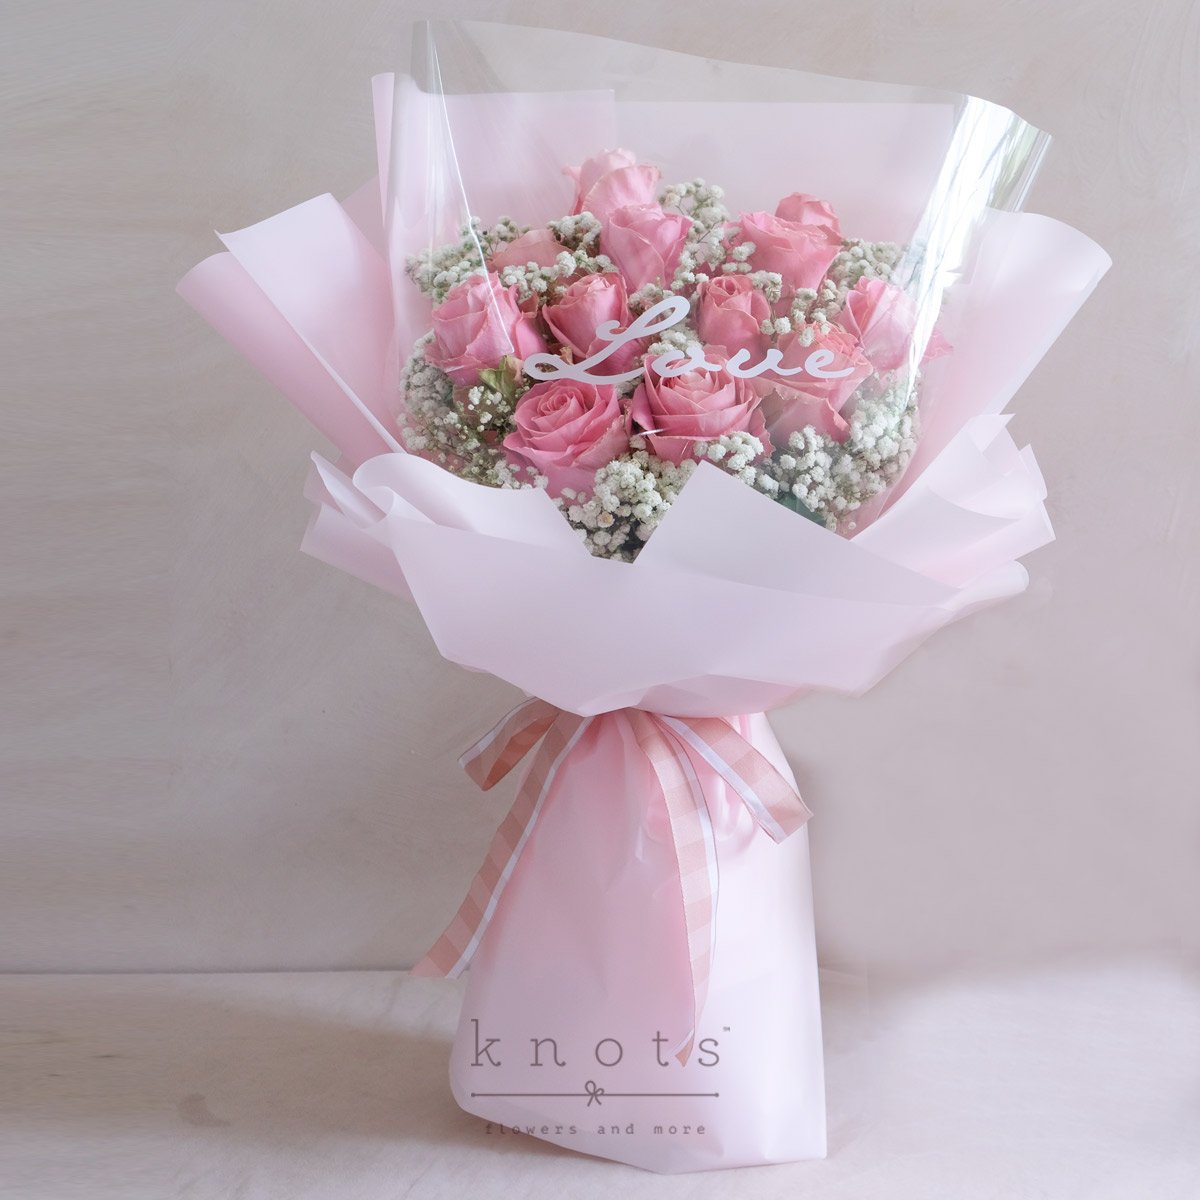 Everyday in Love (Pink Ecuadorian Roses Bouquet)